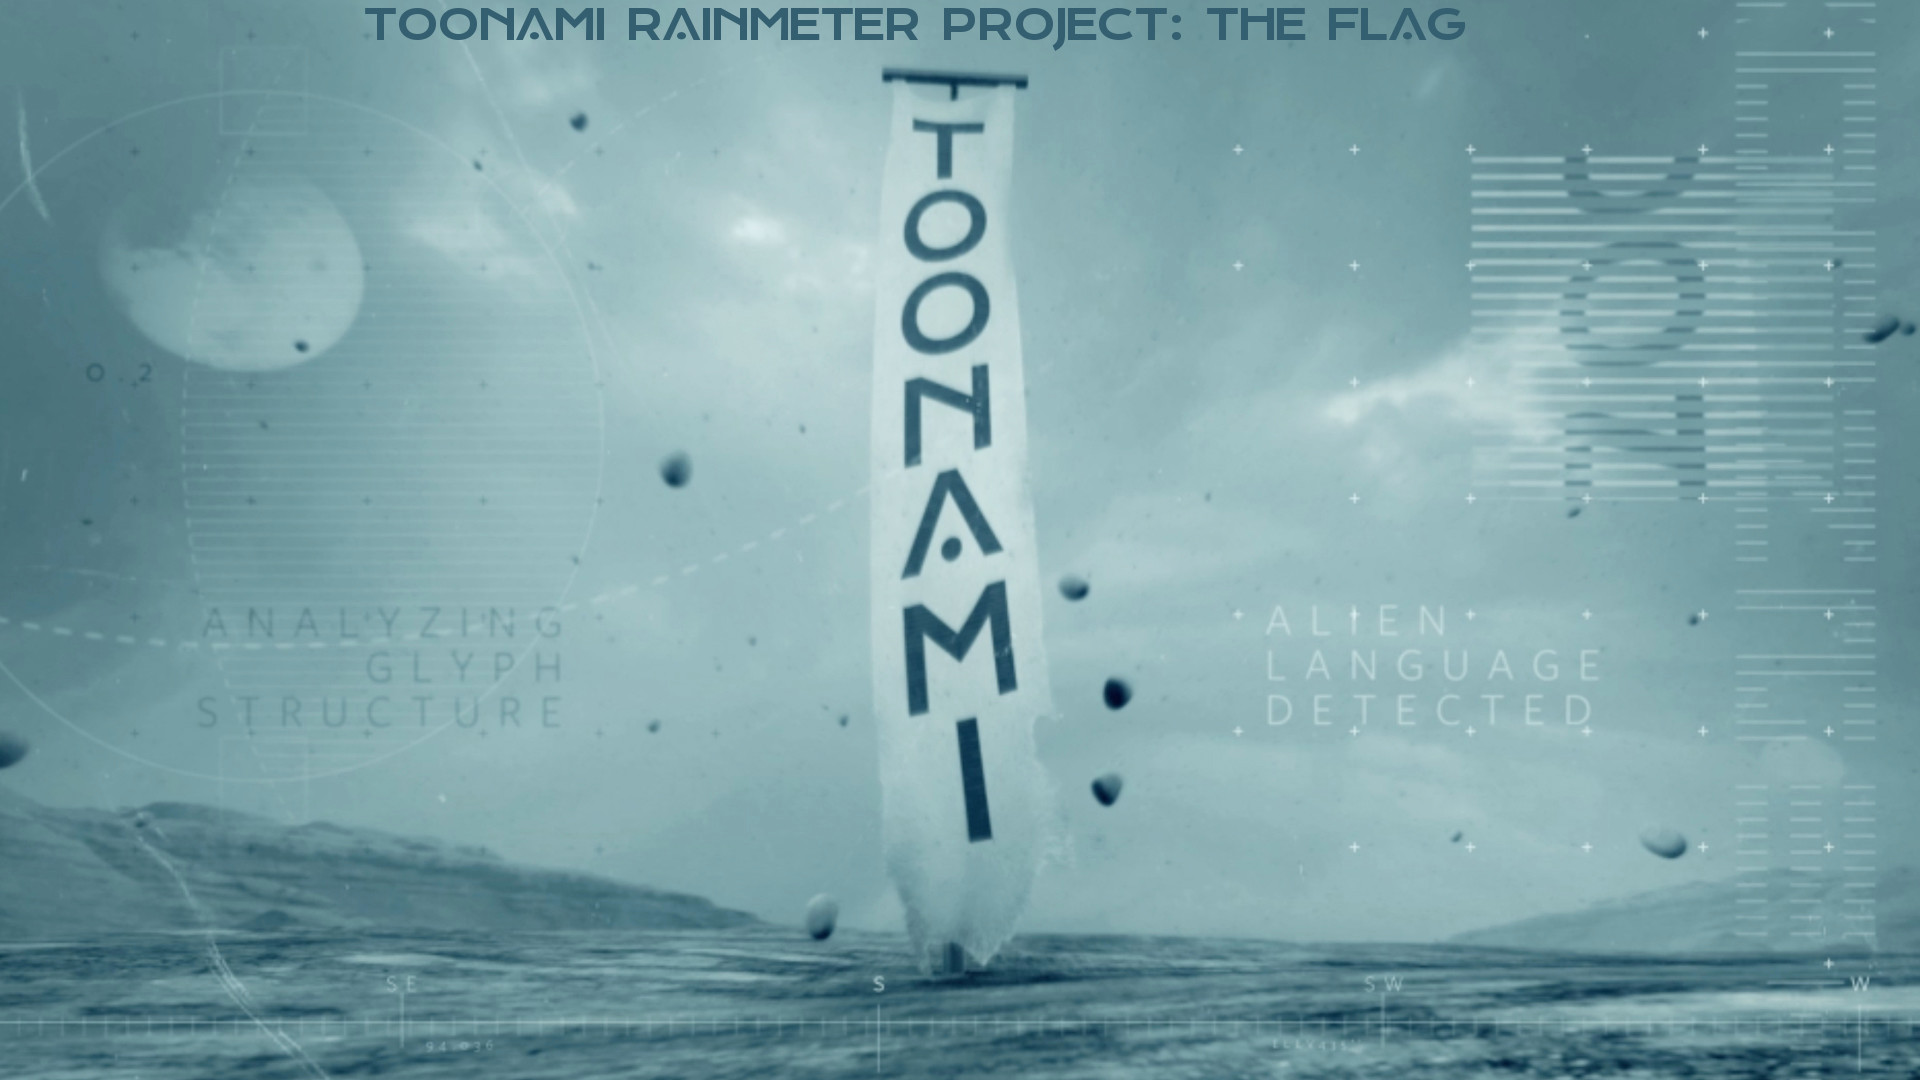 1920x1080 ... HackalotSpark Toonami Rainmeter Project - The Flag 1.0 by HackalotSpark